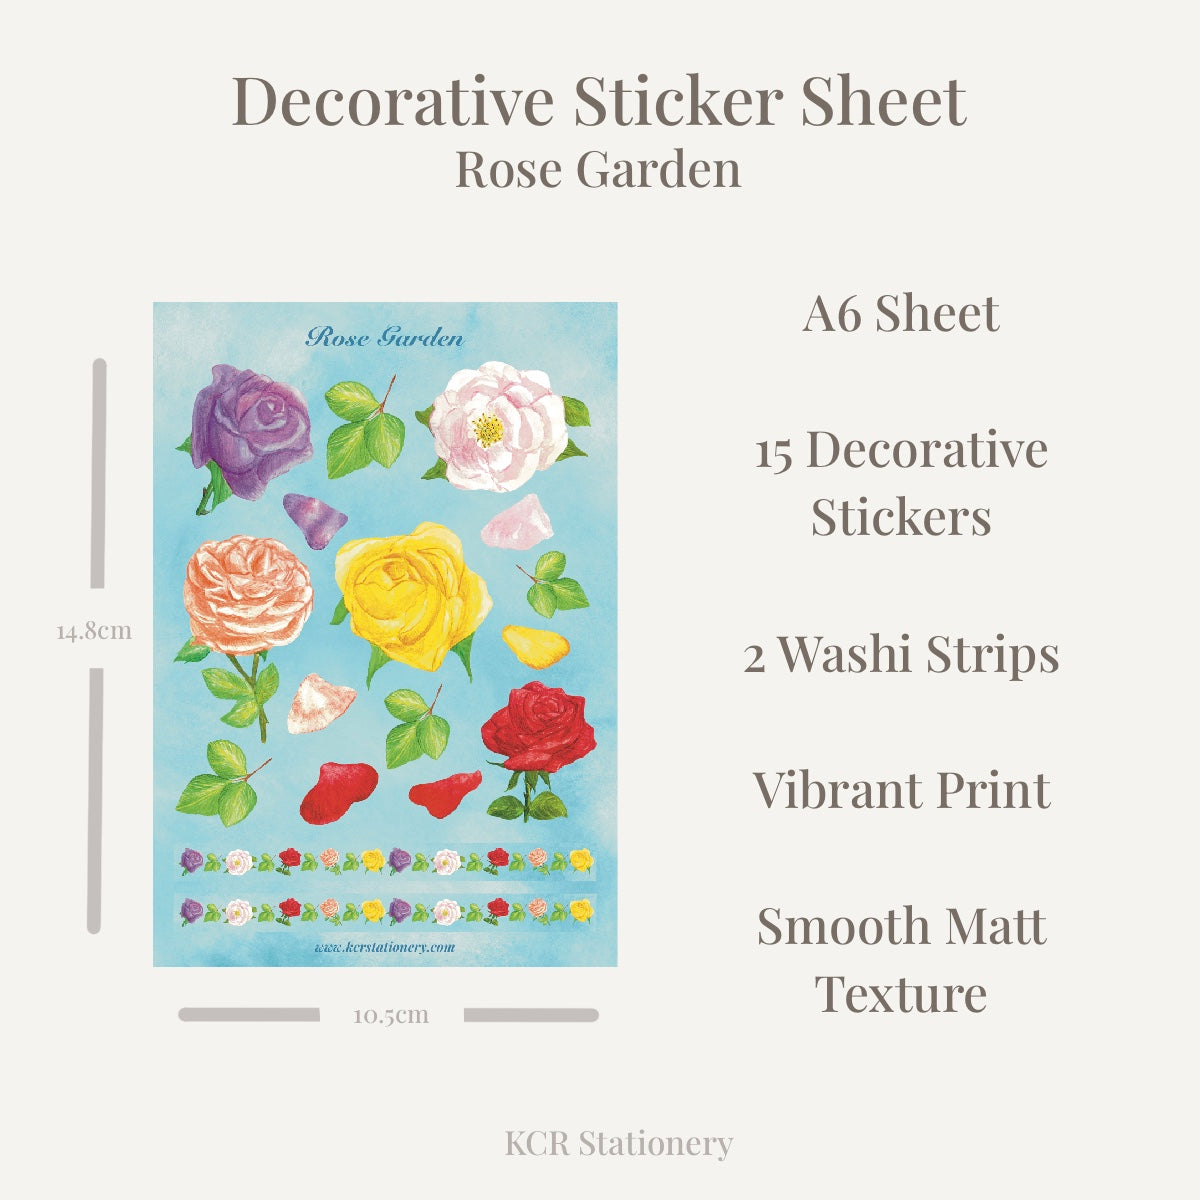 Decorative sticker sheet infographic 